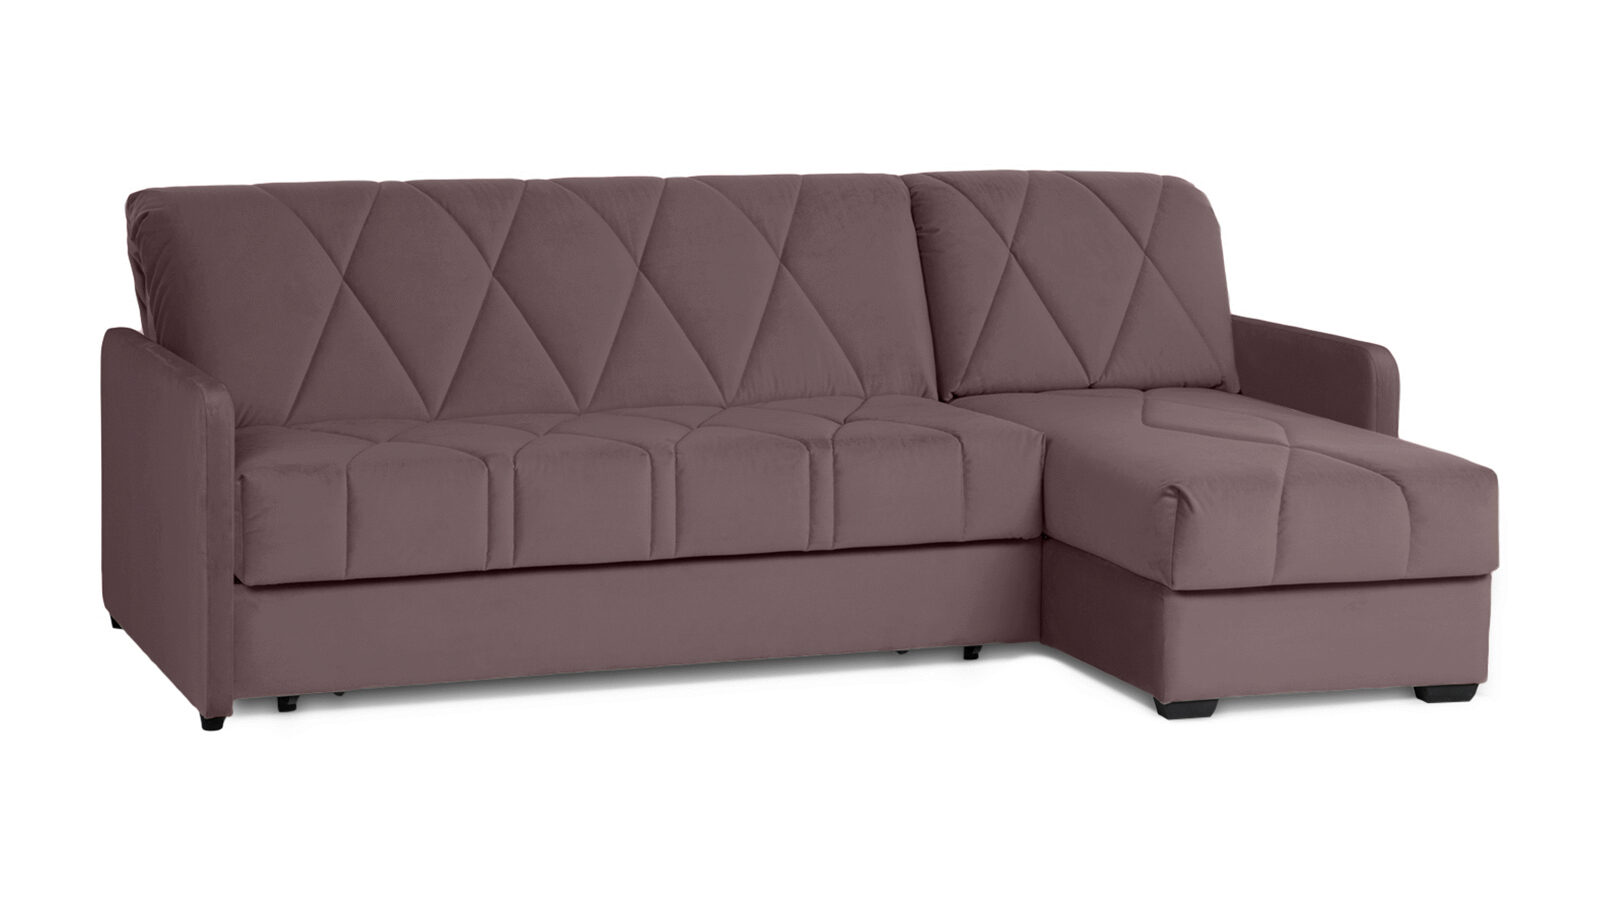 Угловой диван Domo Pro с узкими подлокотниками, стежка ромб